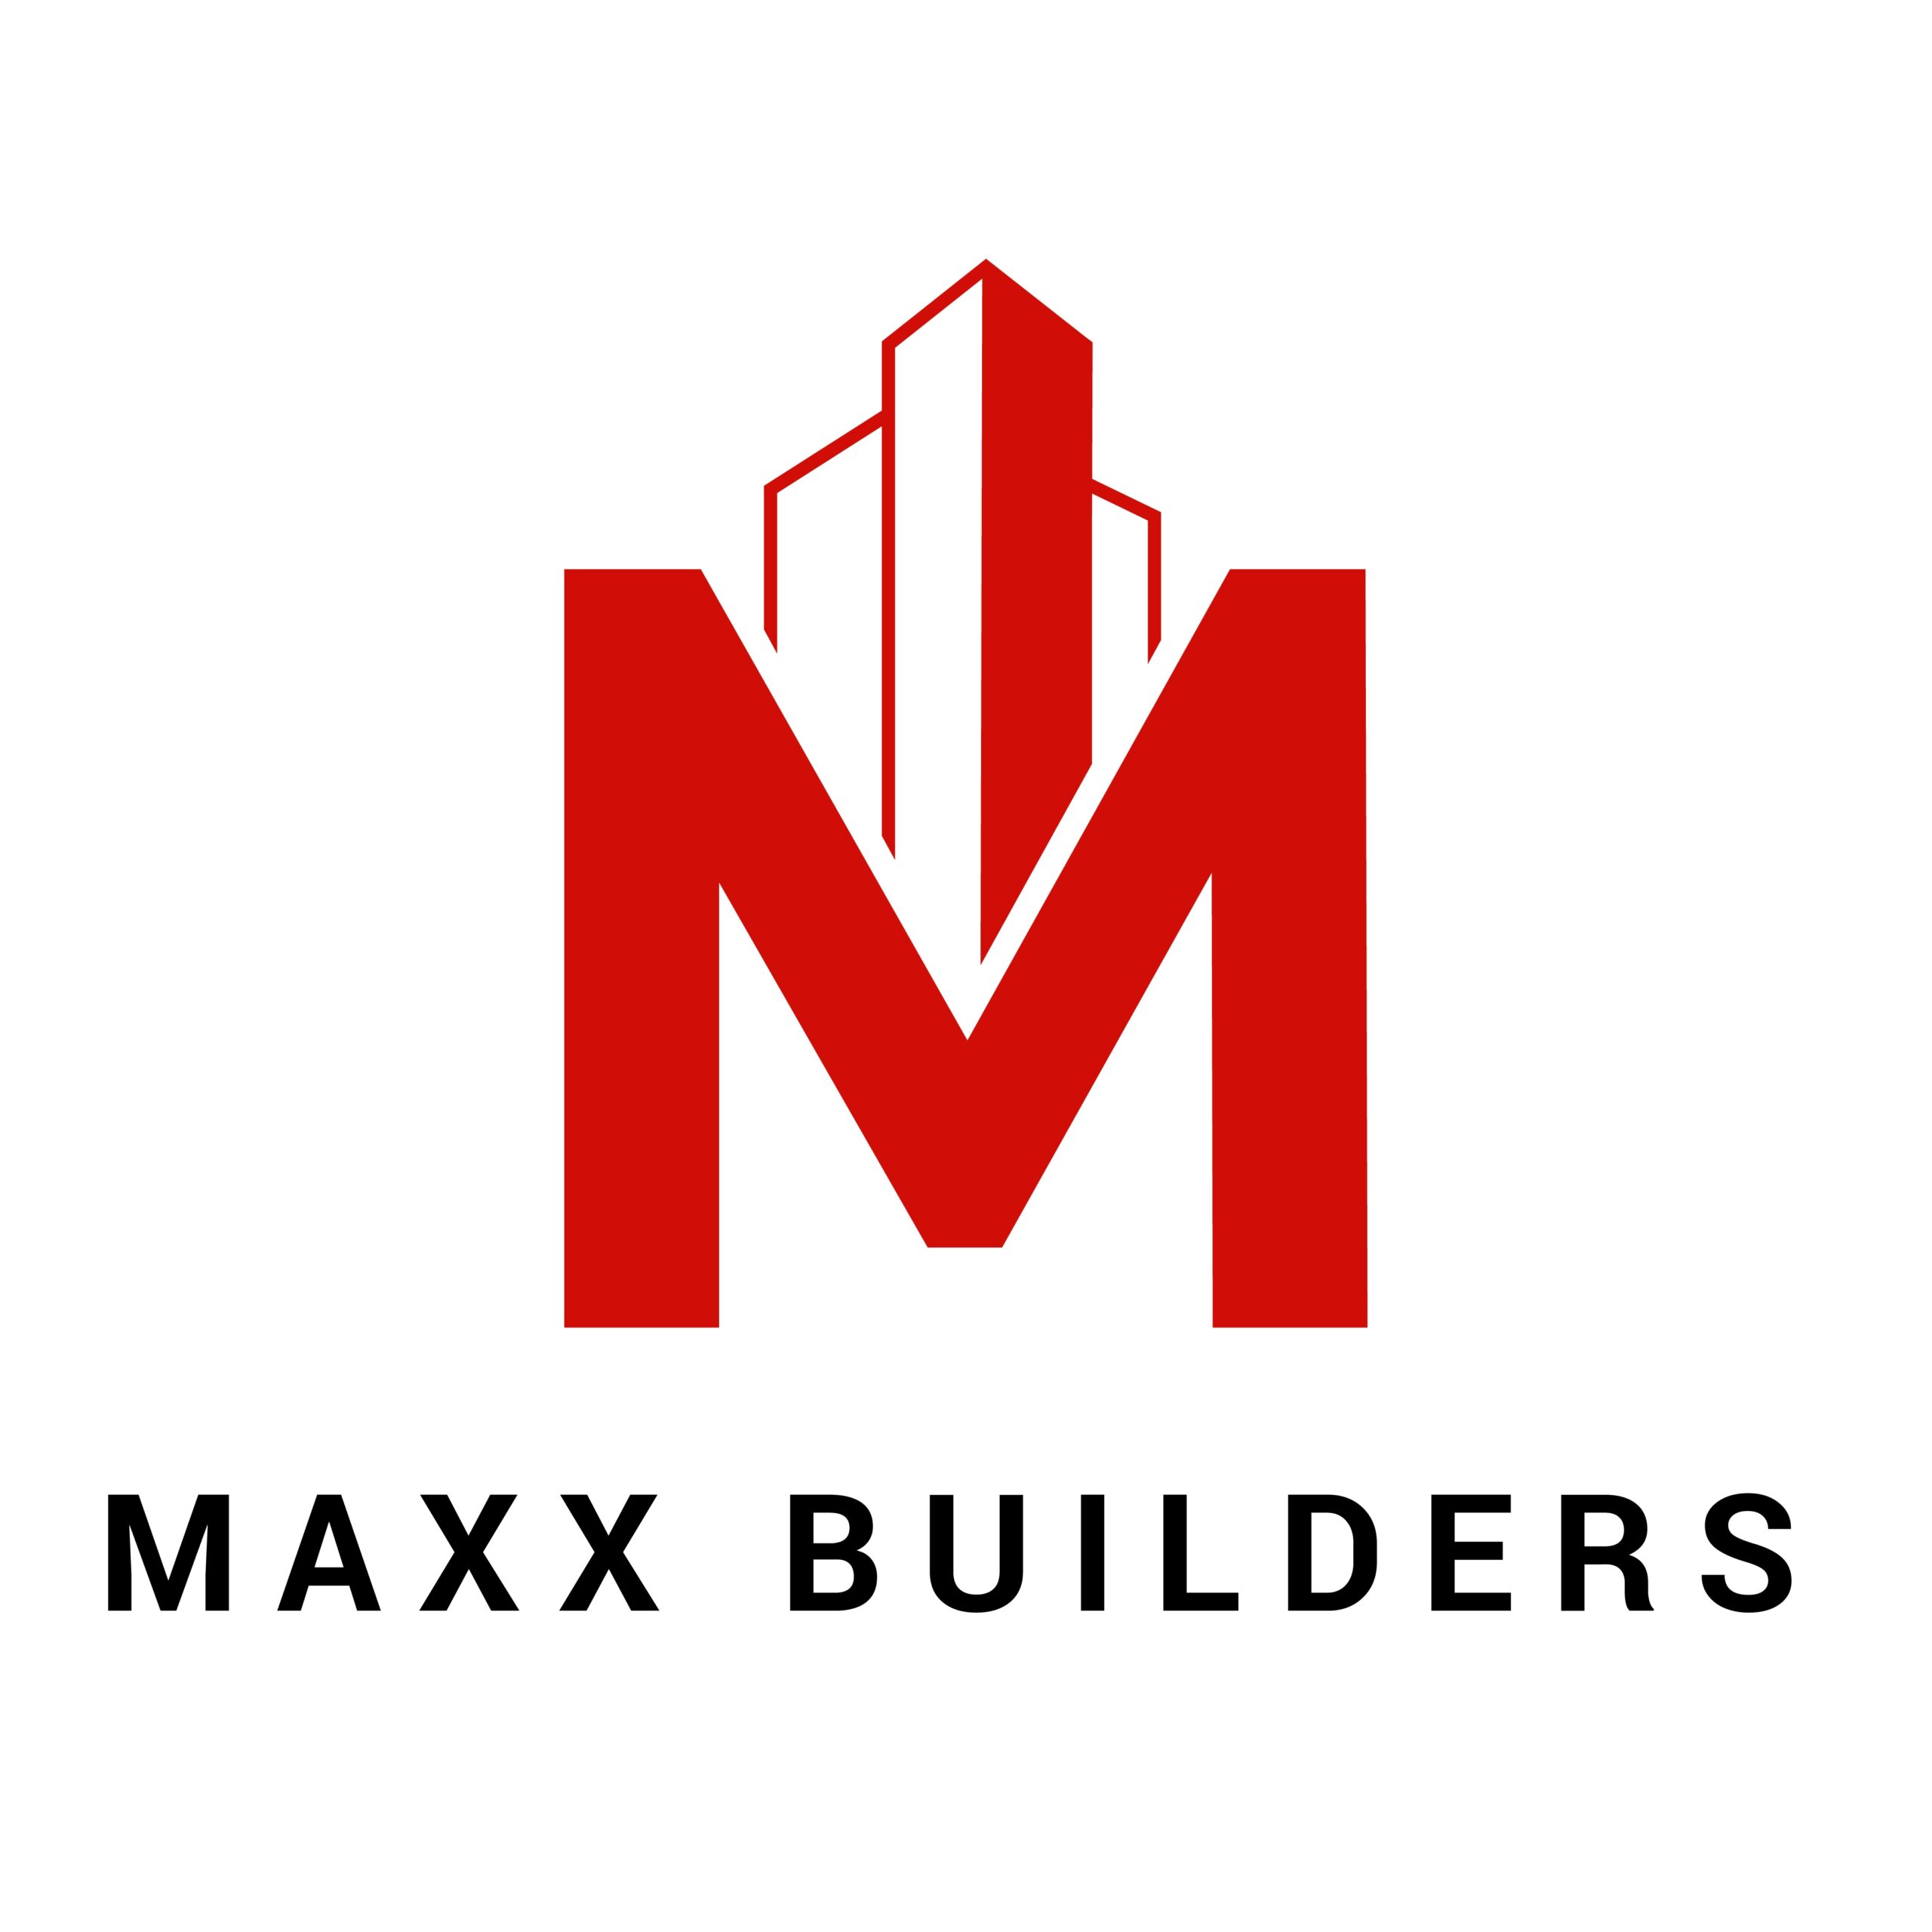 (c) Maxxbuilders.com